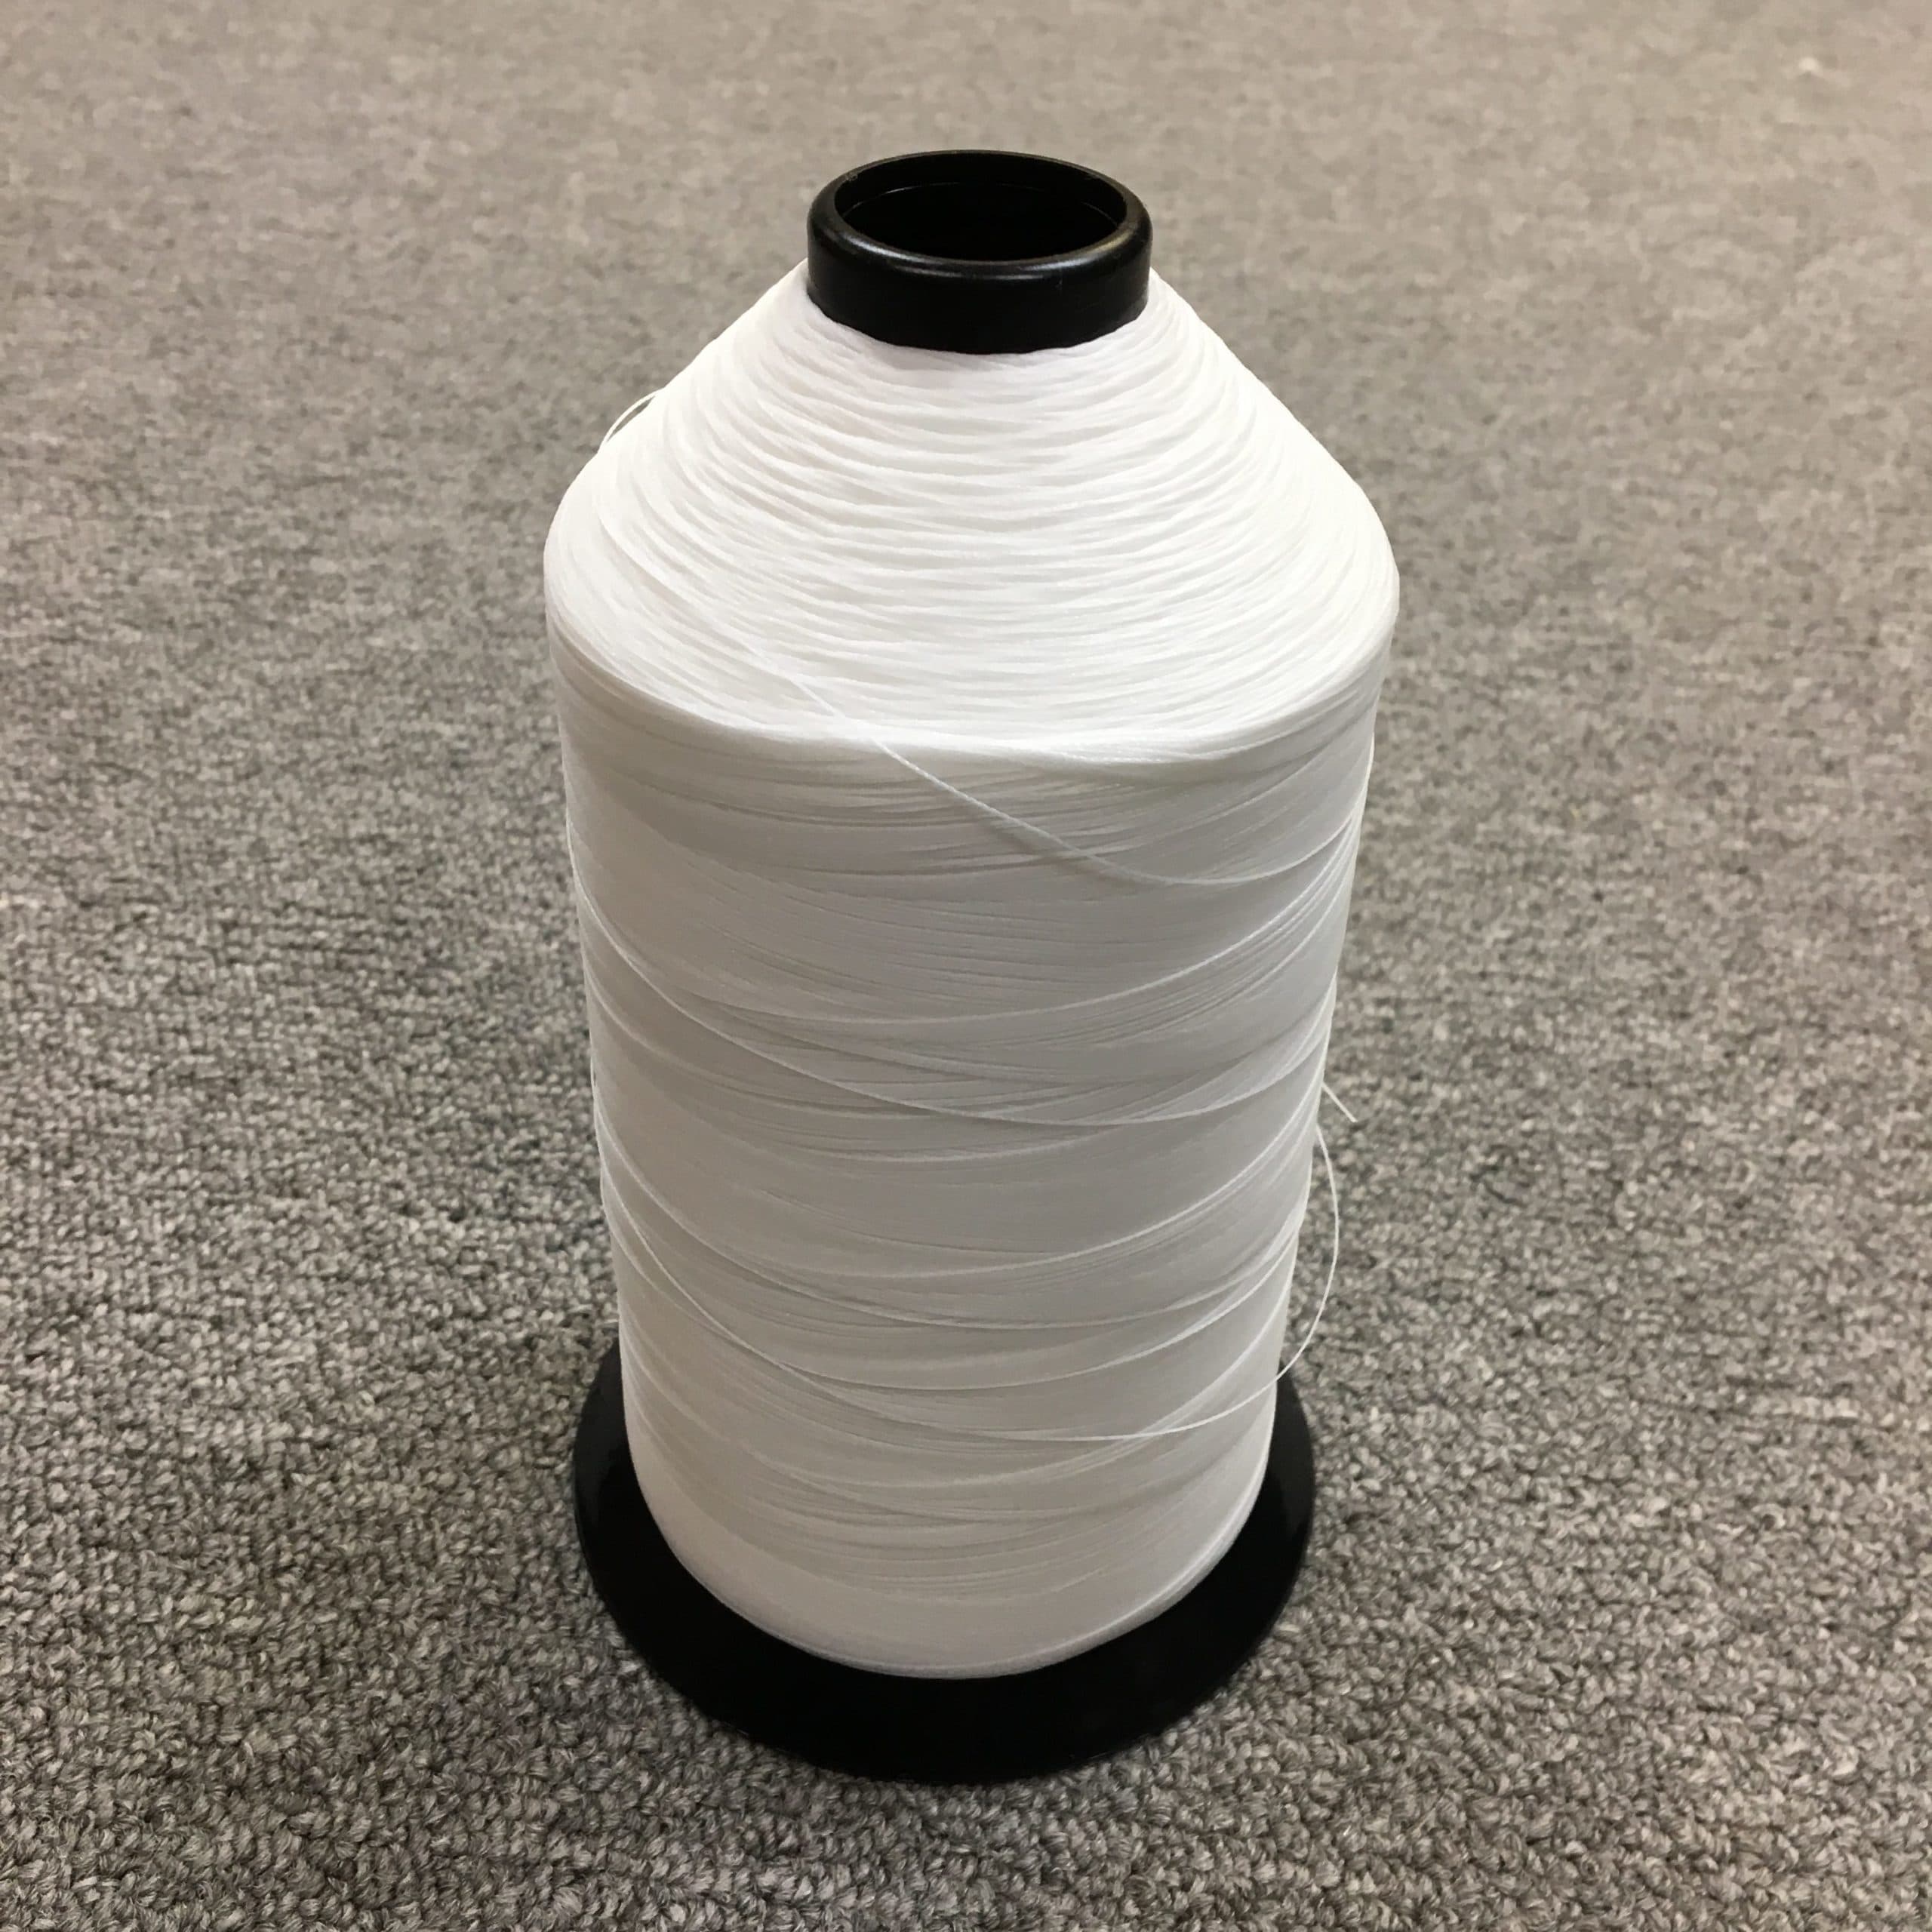 Bonded Nylon Thread - Size 277 - TEX-270 - Colors: Black and White